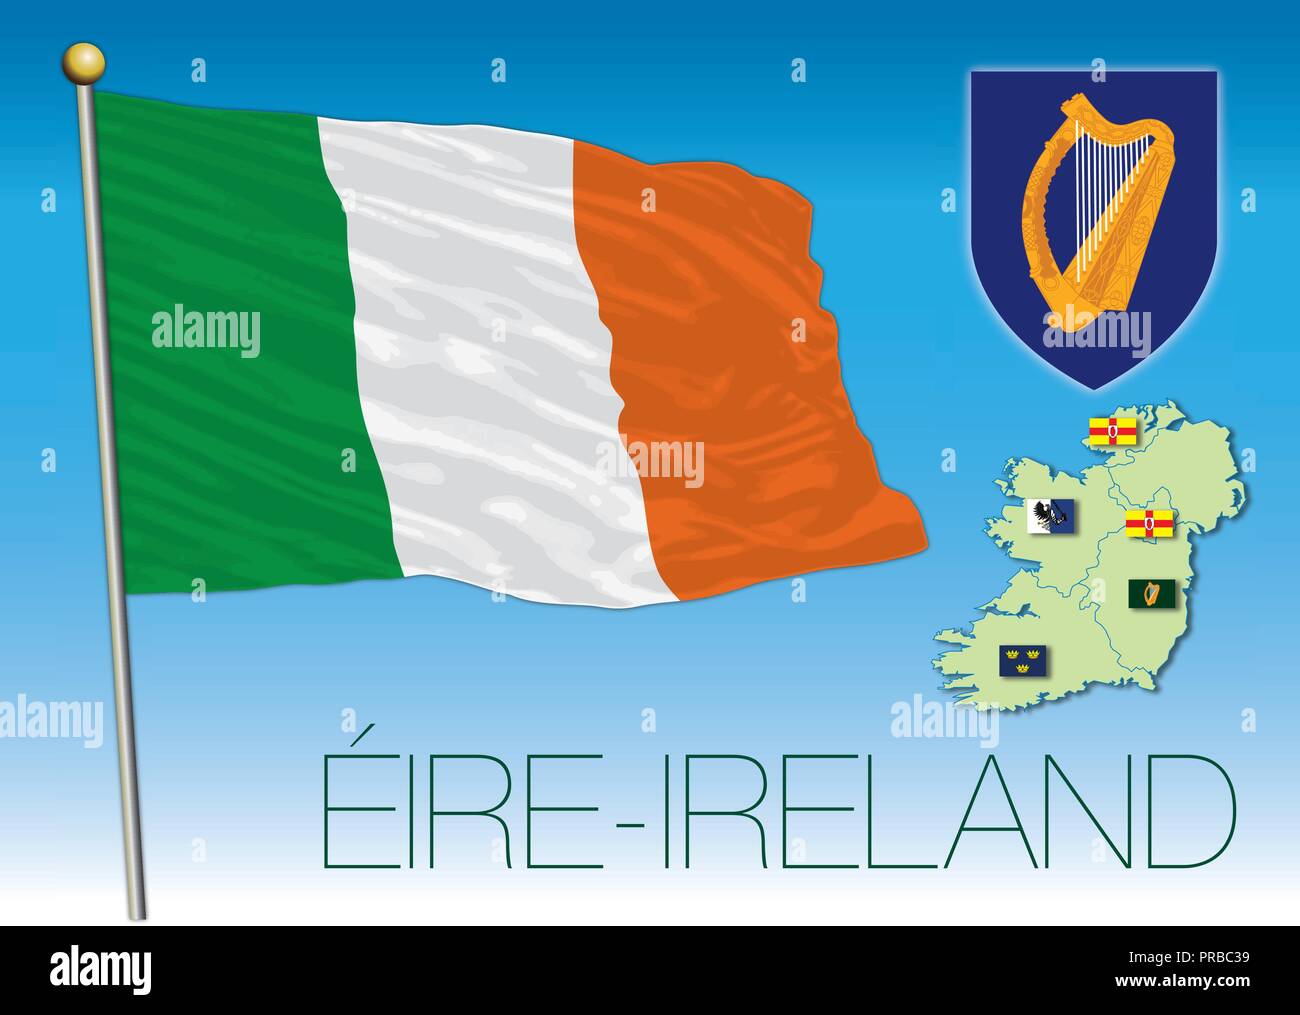 Eire or Ireland flag, vector illustration Stock Vector